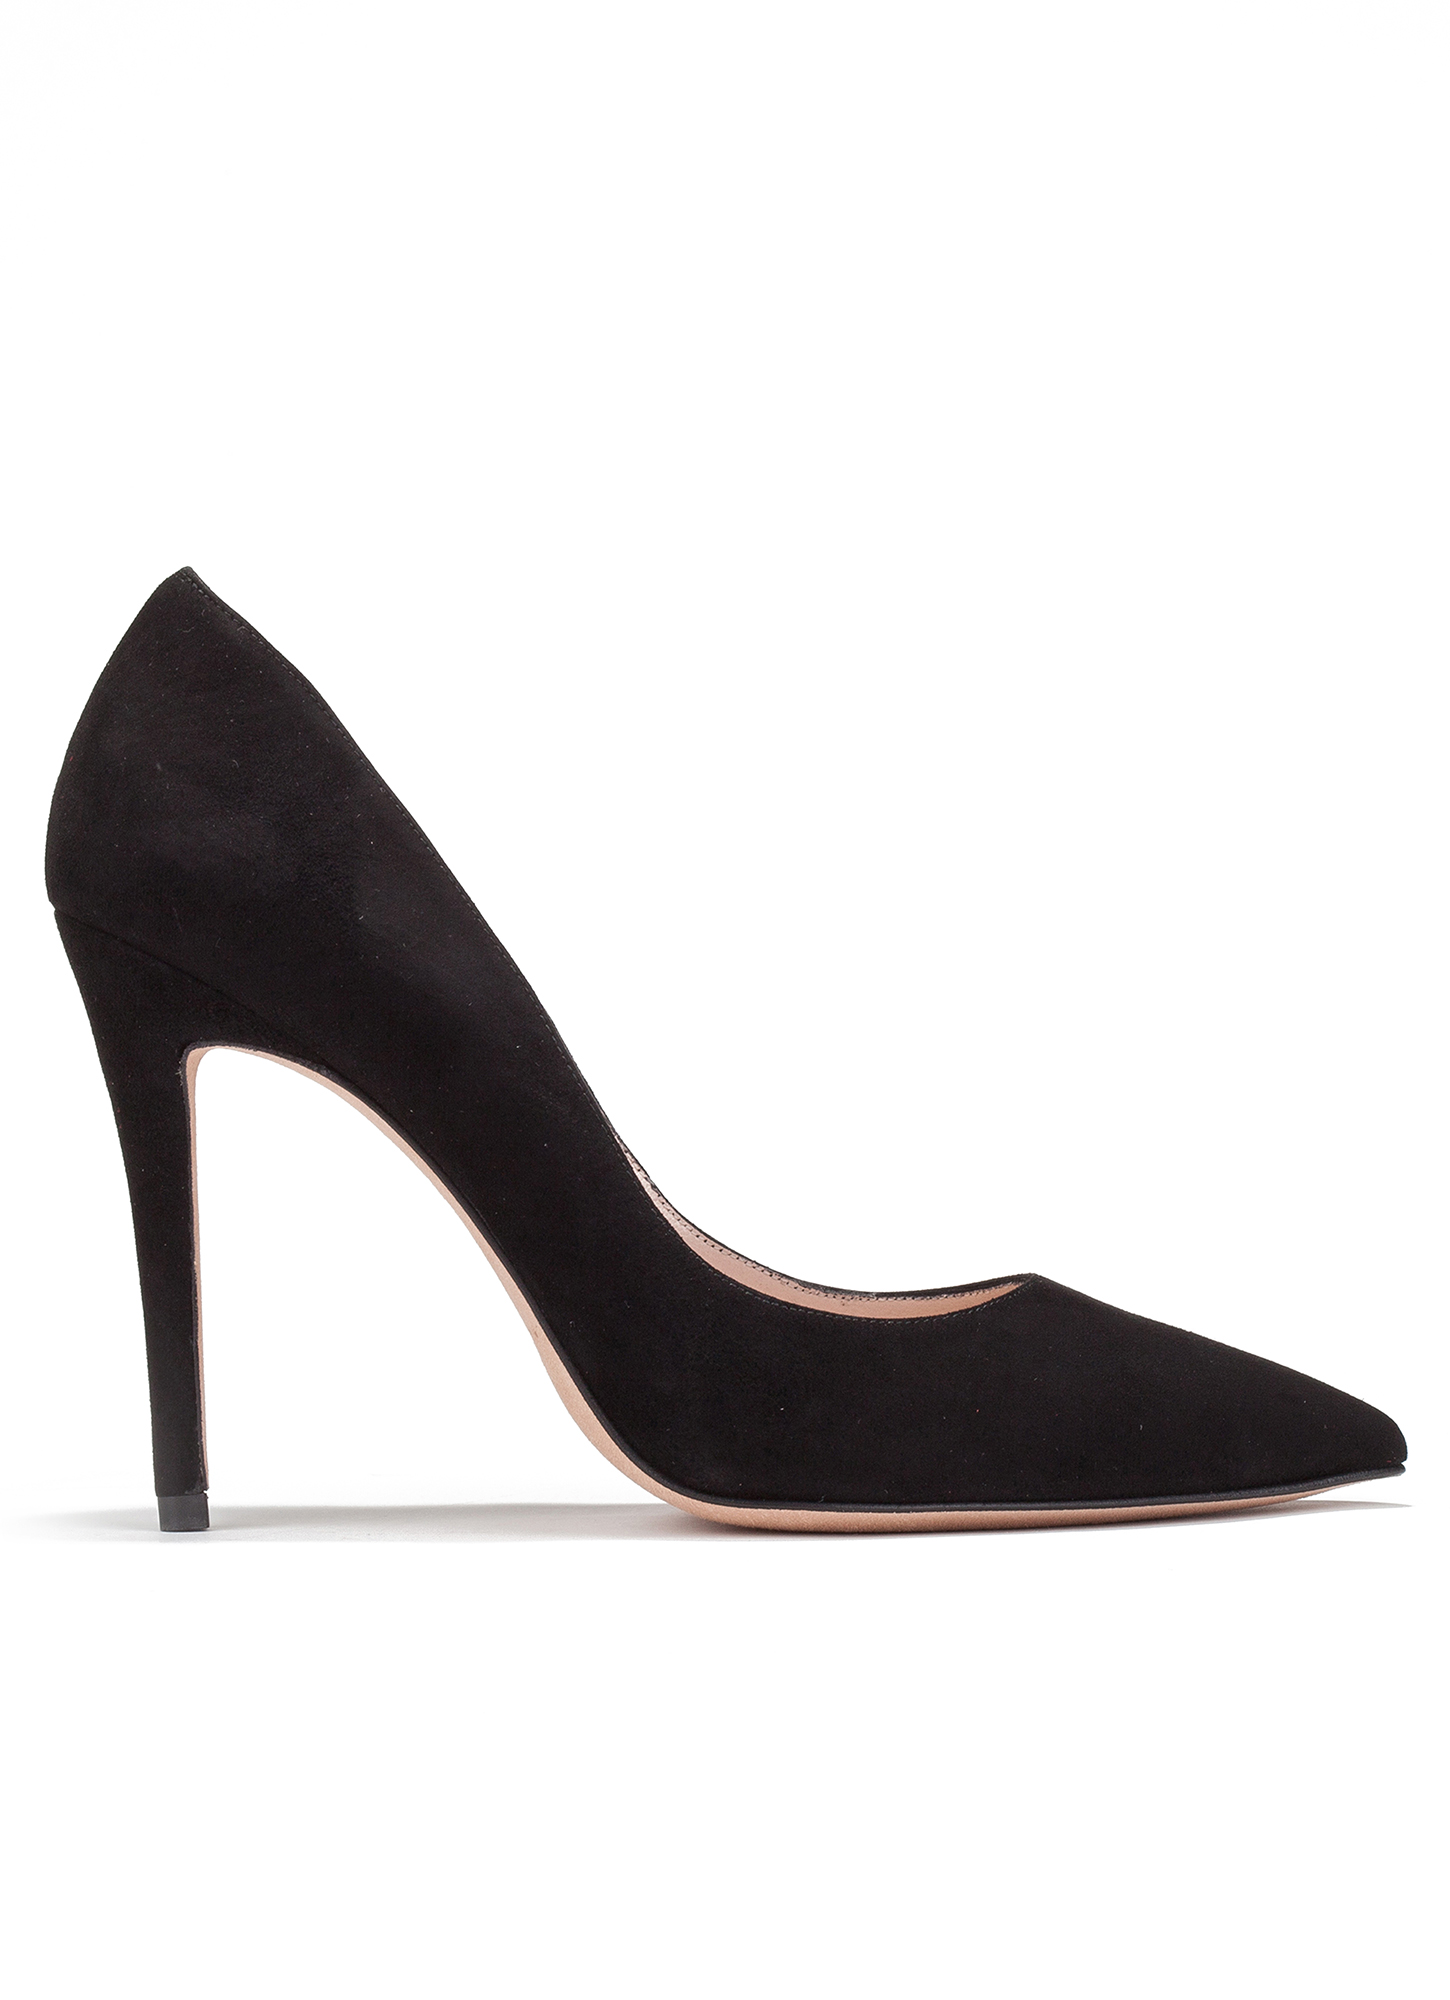 High heel pumps in black suede - online shoe store Pura Lopez . PURA LOPEZ